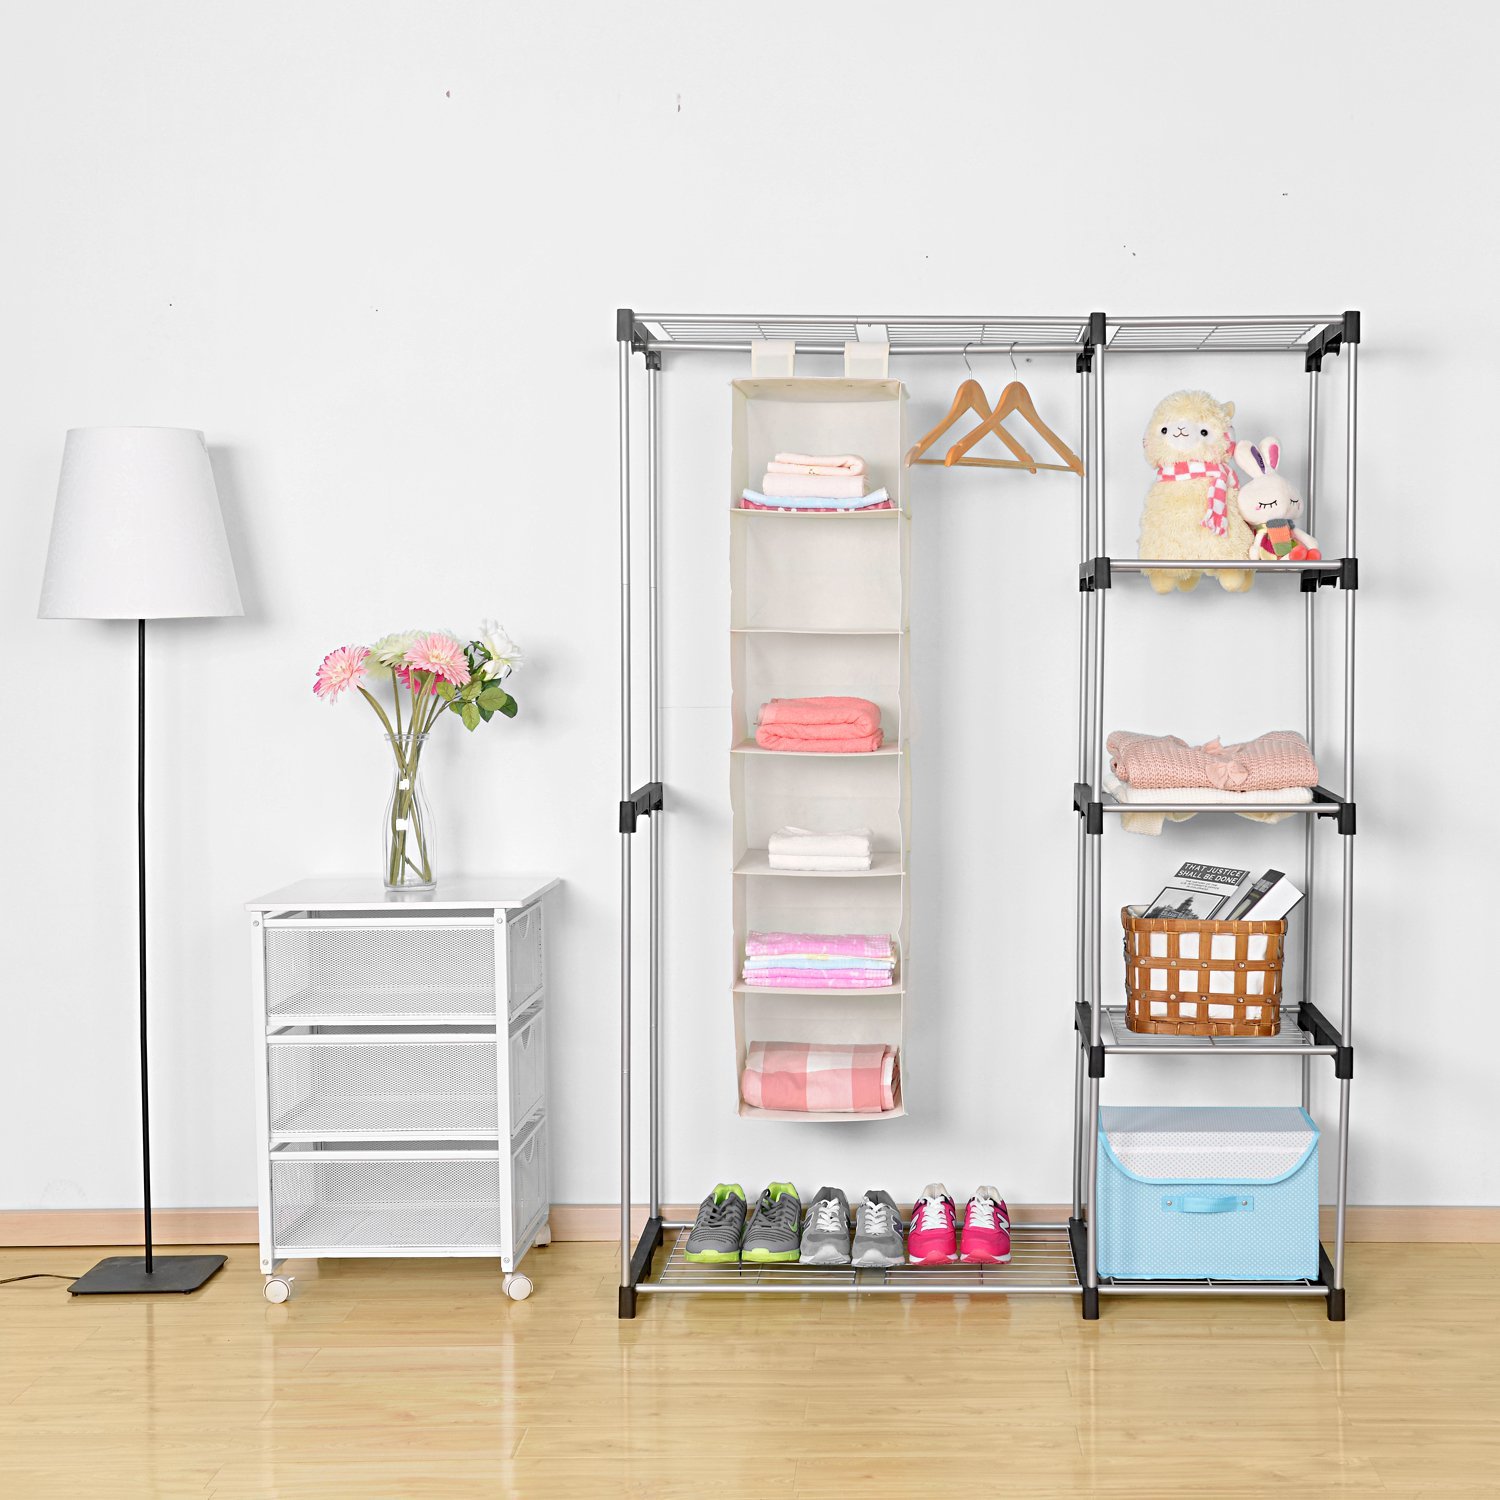 MaidMax 6-tier hanging closet shelves closet organizer for $7 with code